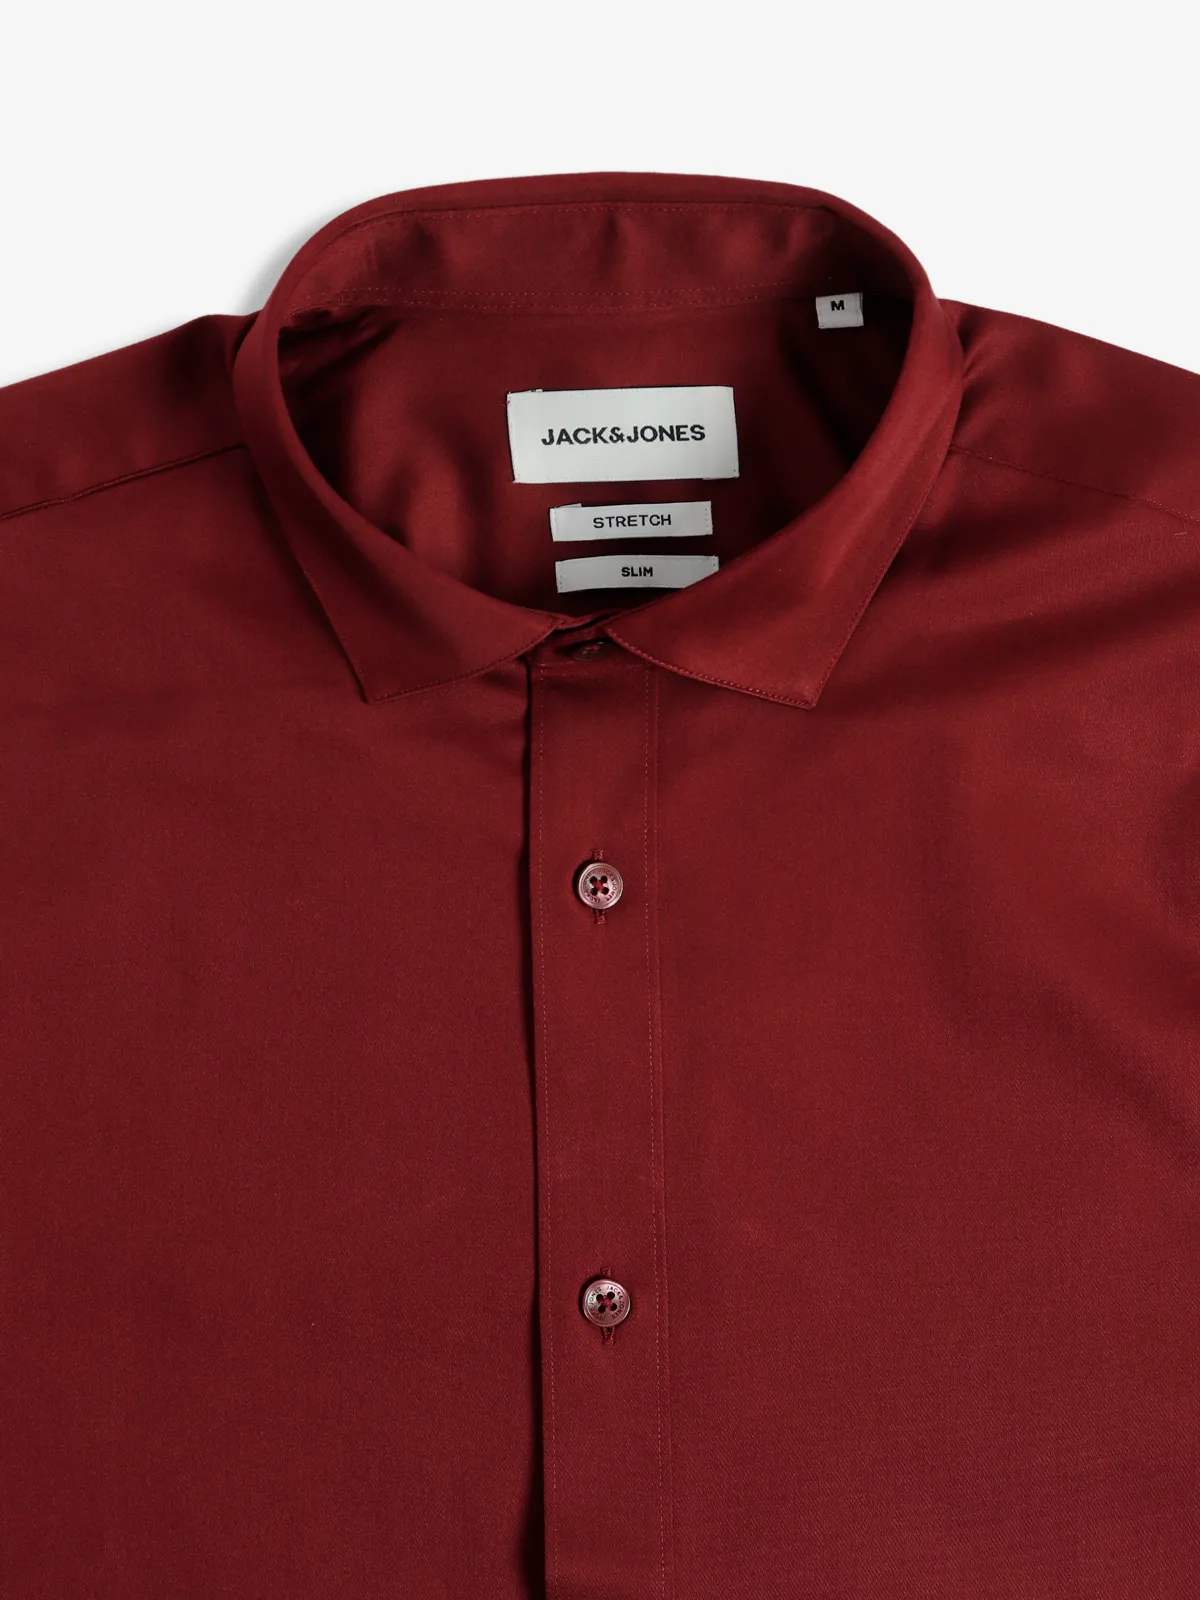 JACK&JONES maroon plain slim fit shirt